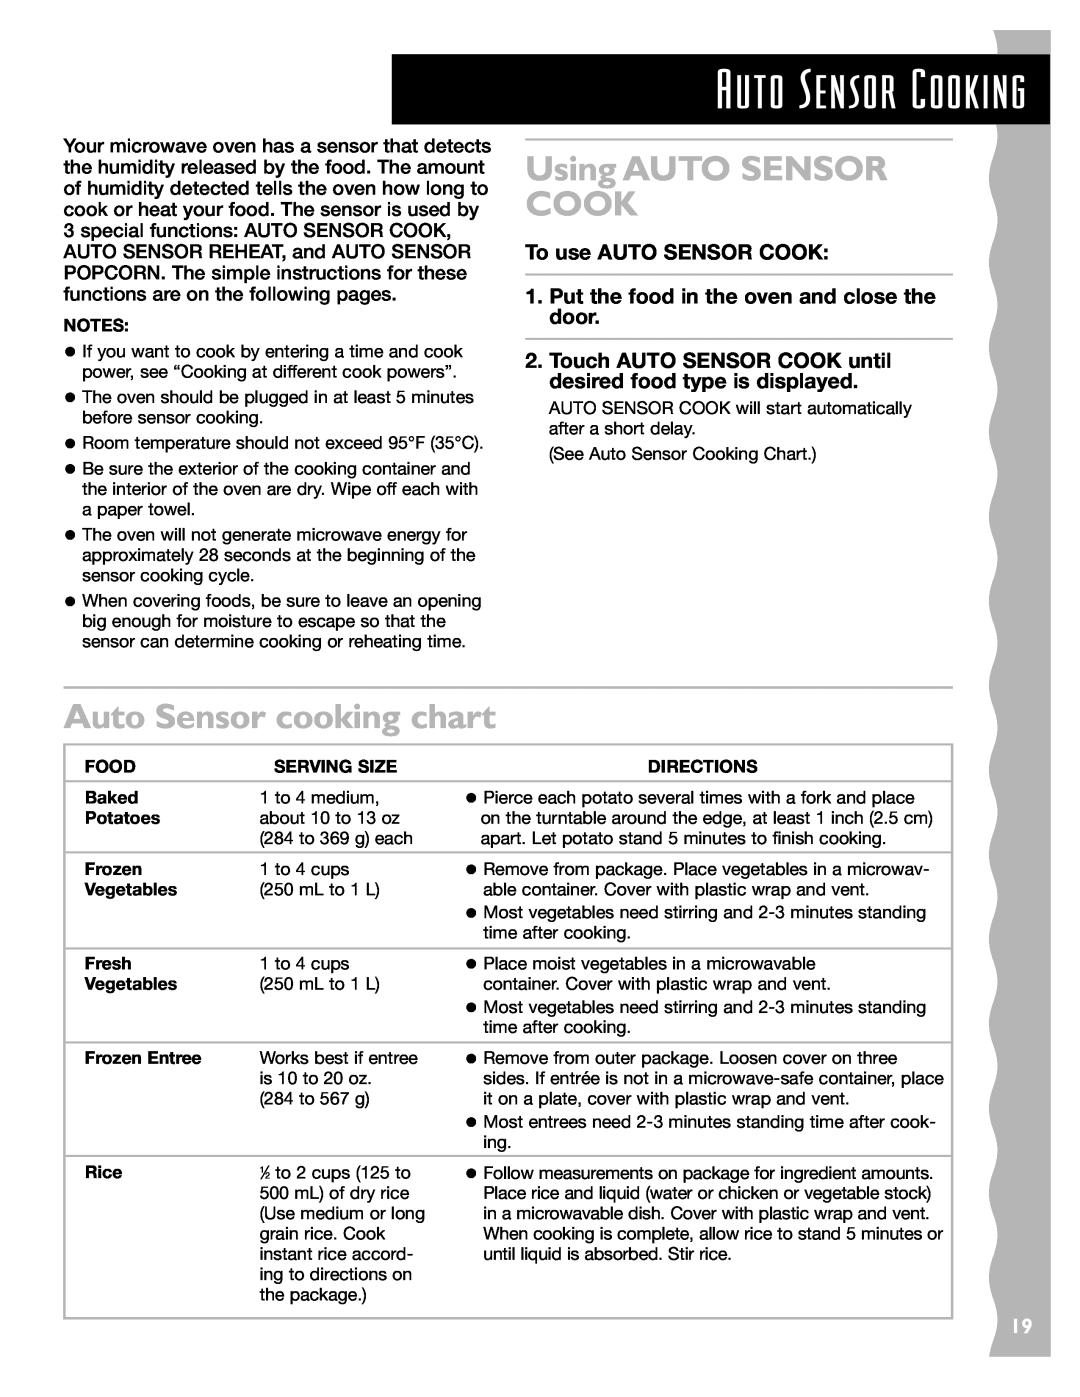 KitchenAid KCMC155JWH Using AUTO SENSOR COOK, Auto Sensor cooking chart, To use AUTO SENSOR COOK, Auto Sensor Cooking 